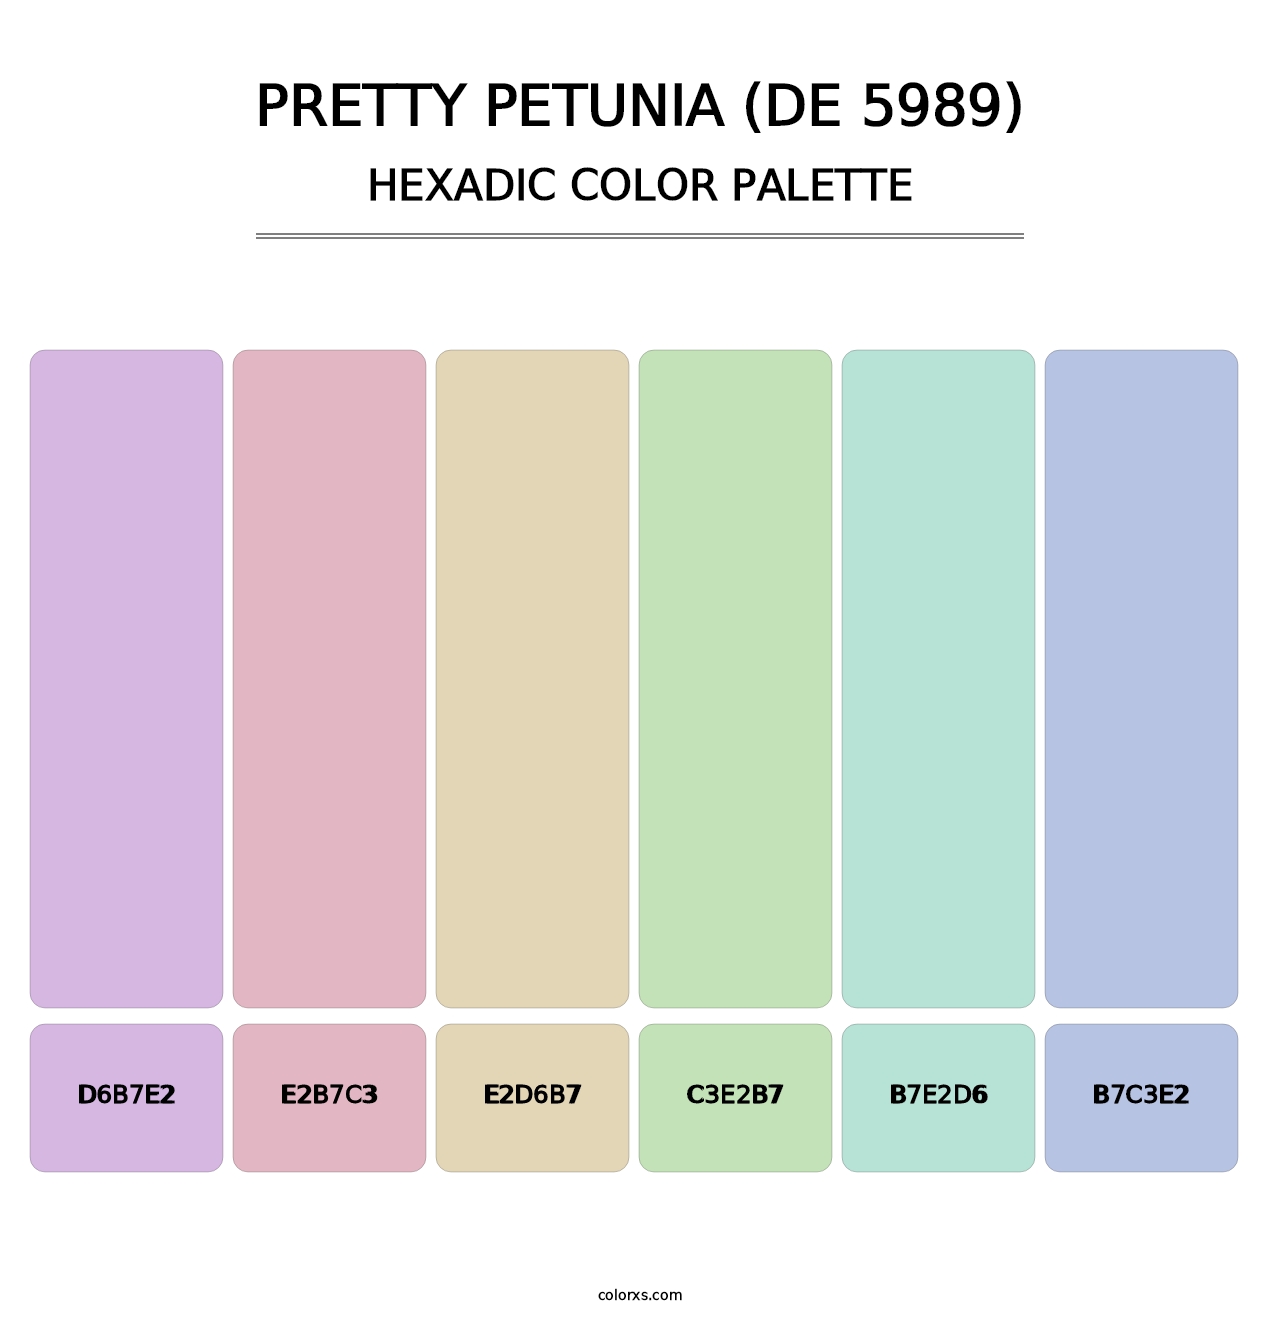 Pretty Petunia (DE 5989) - Hexadic Color Palette